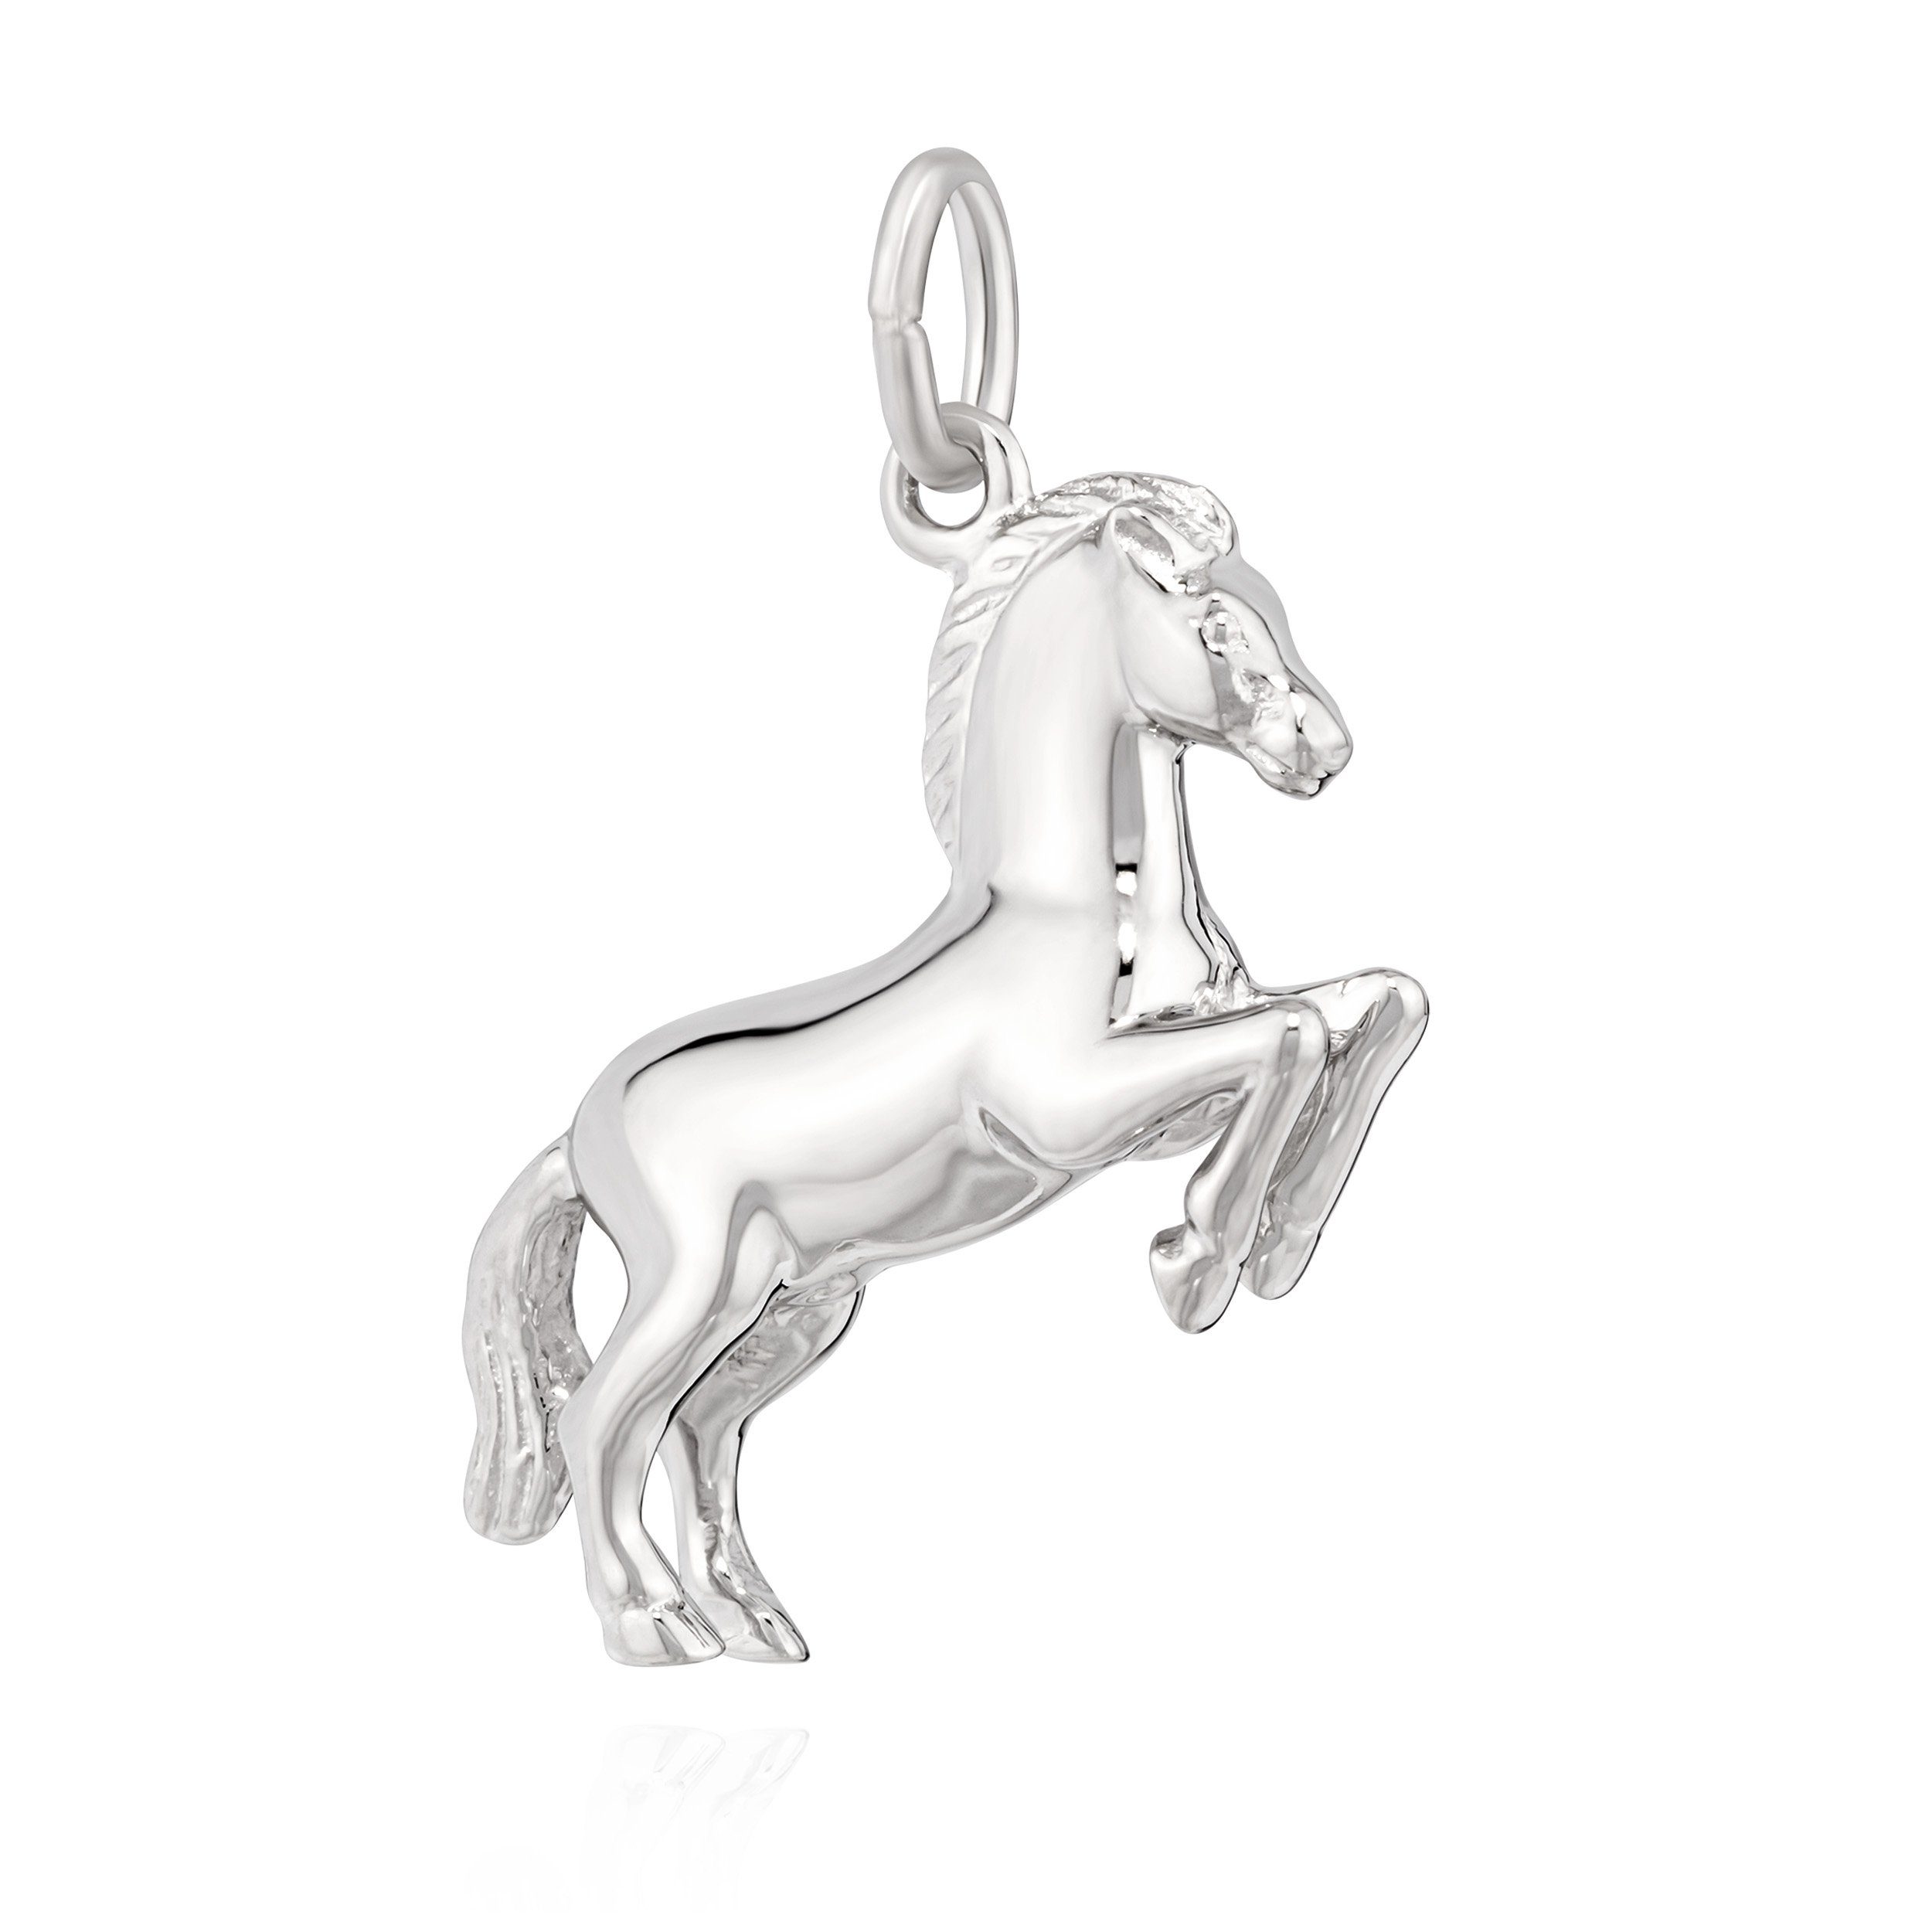 NKlaus Kettenanhänger 24mm Hengst im Sprung 925 Silber Kettenanhänger 3D Pferd glanz anlaufg